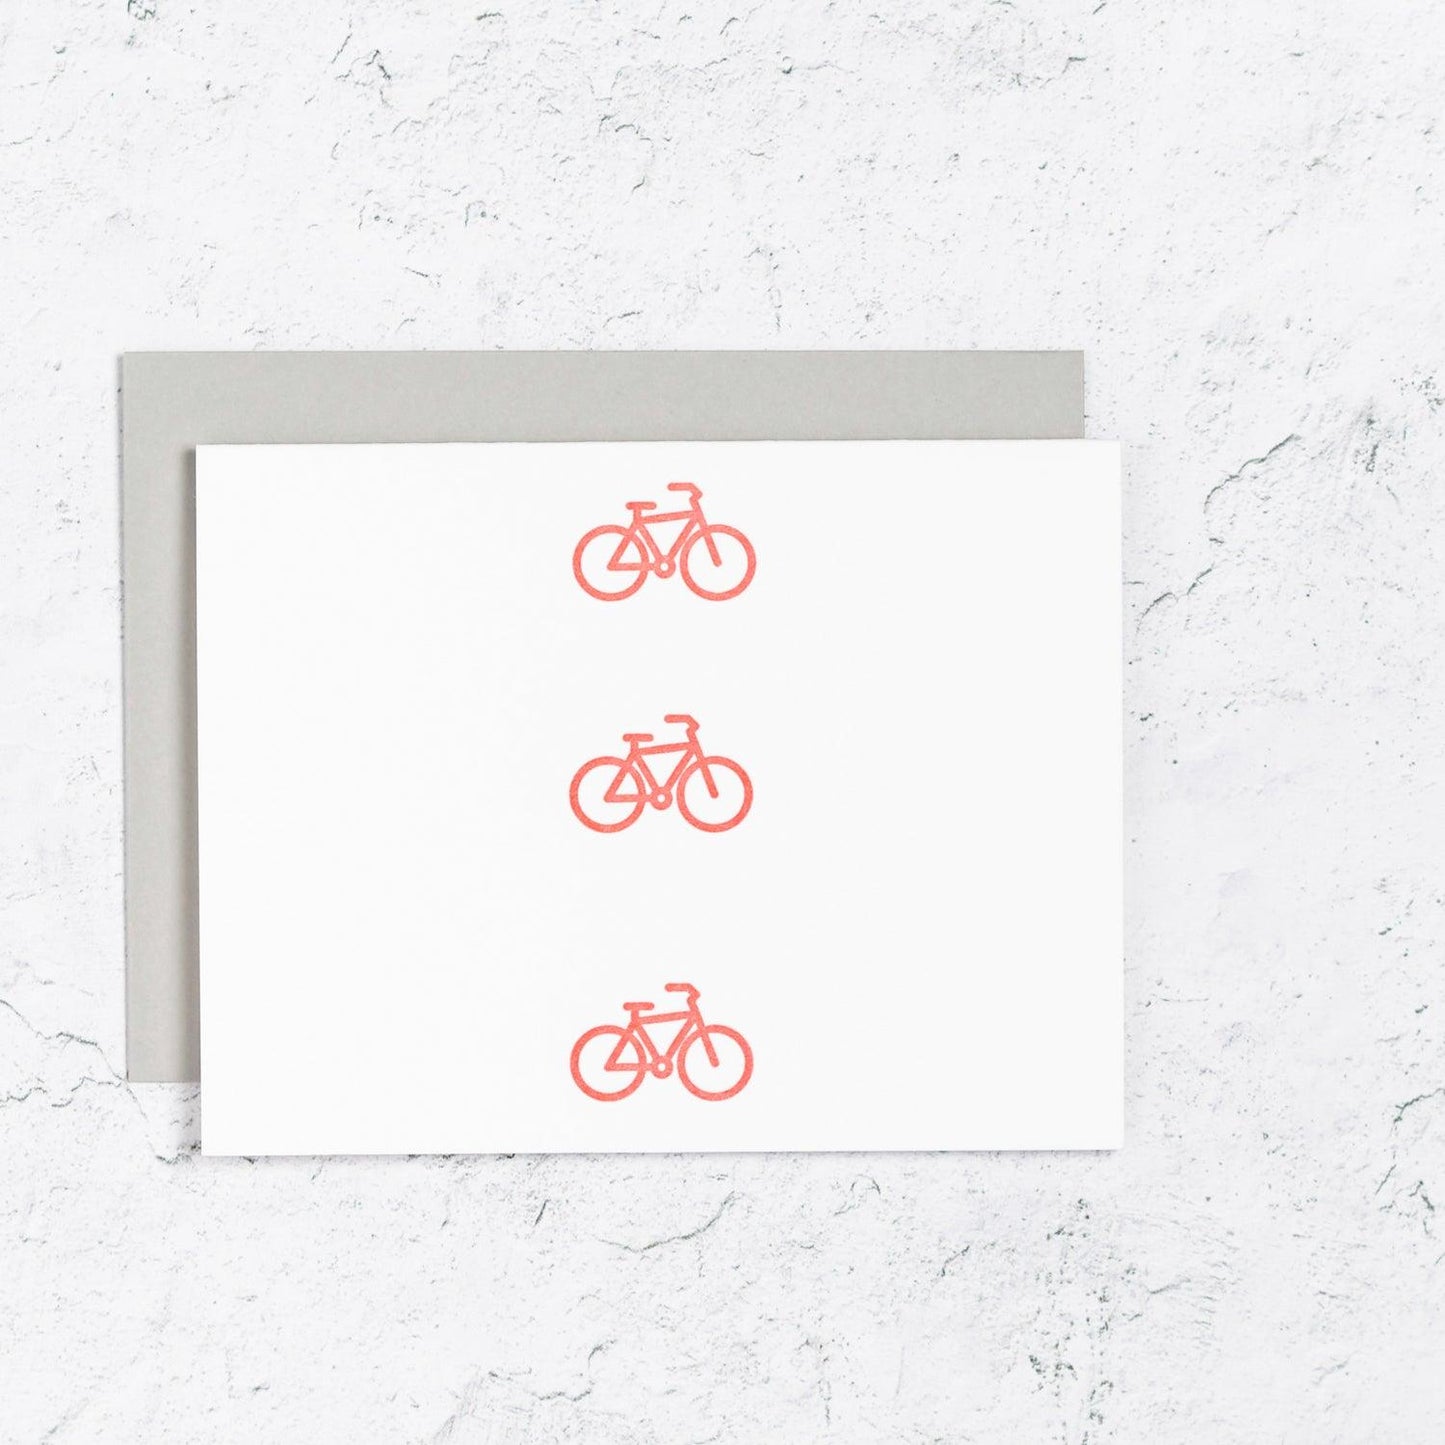 Bike notecard set with letterpress cards